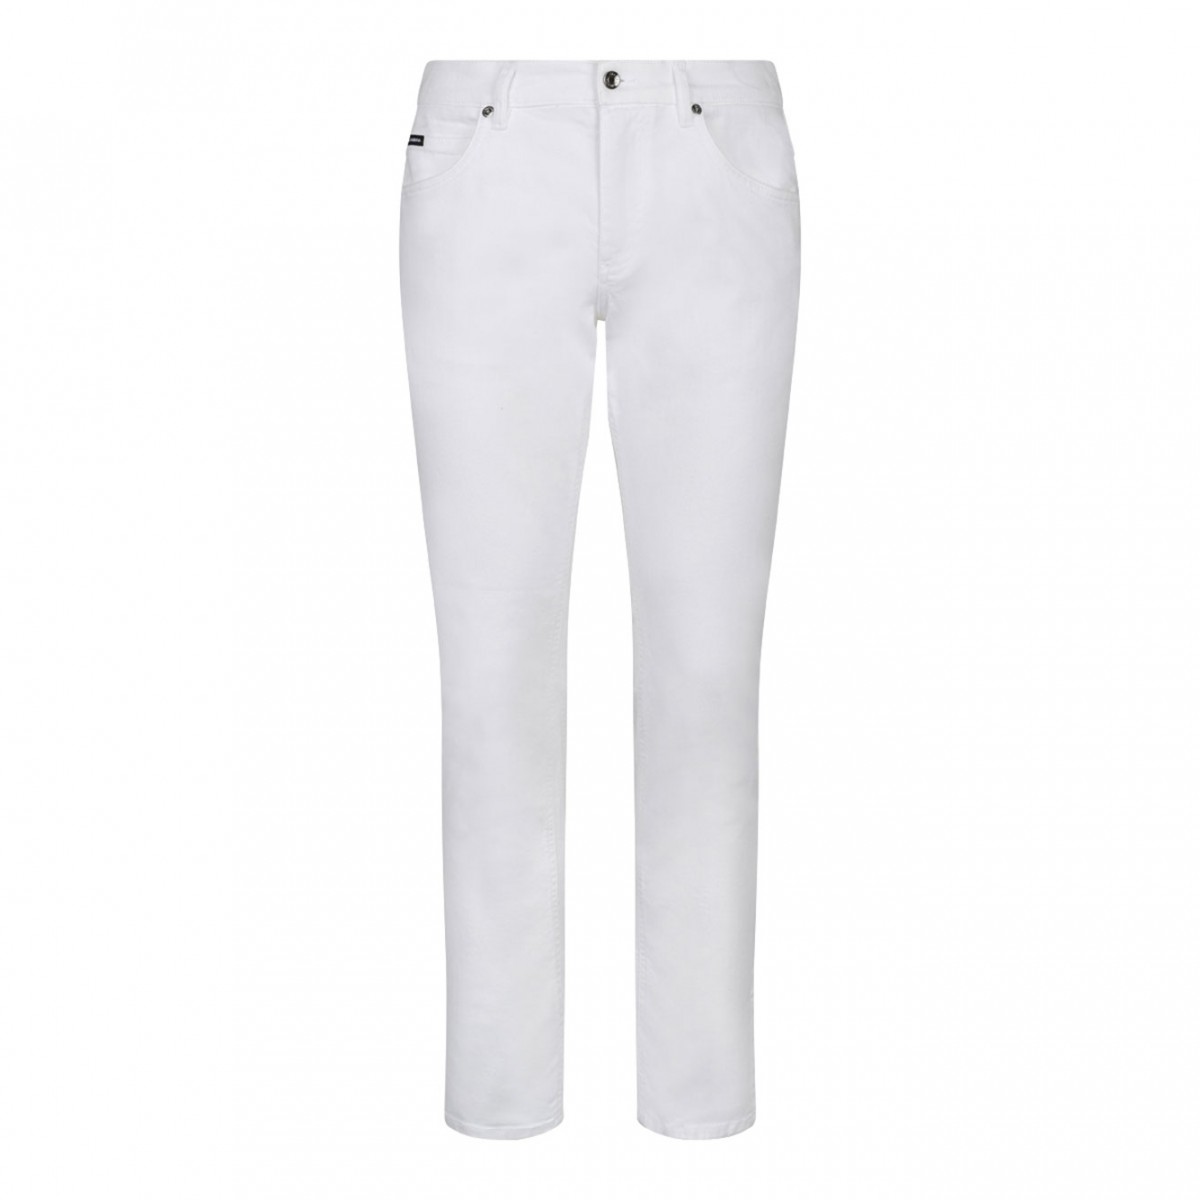 White Stretch Jeans